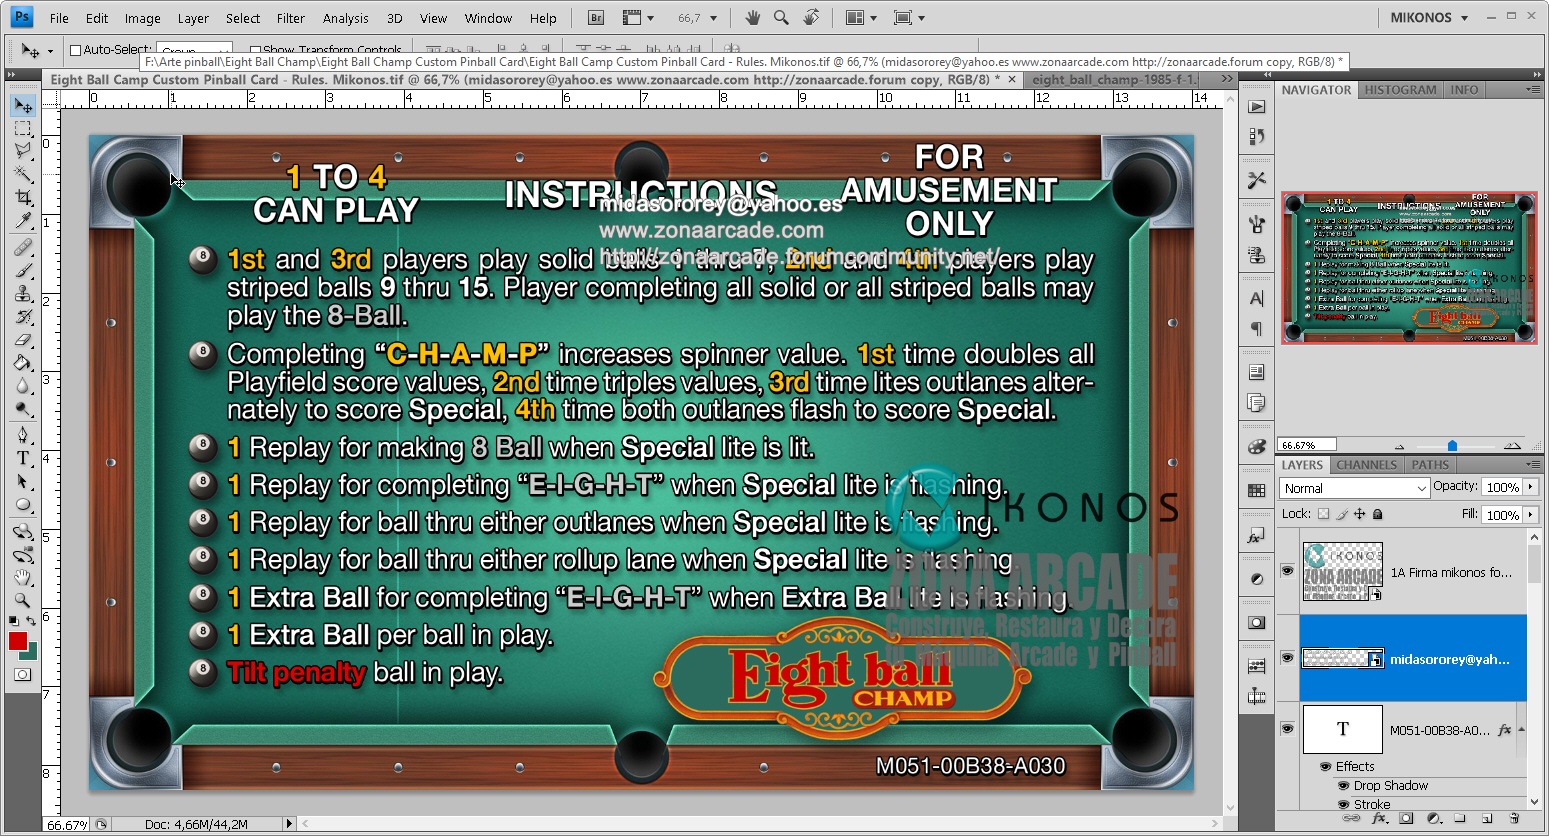 Eight Ball Champ Pinball Card Customized - Rules. Mikonos1